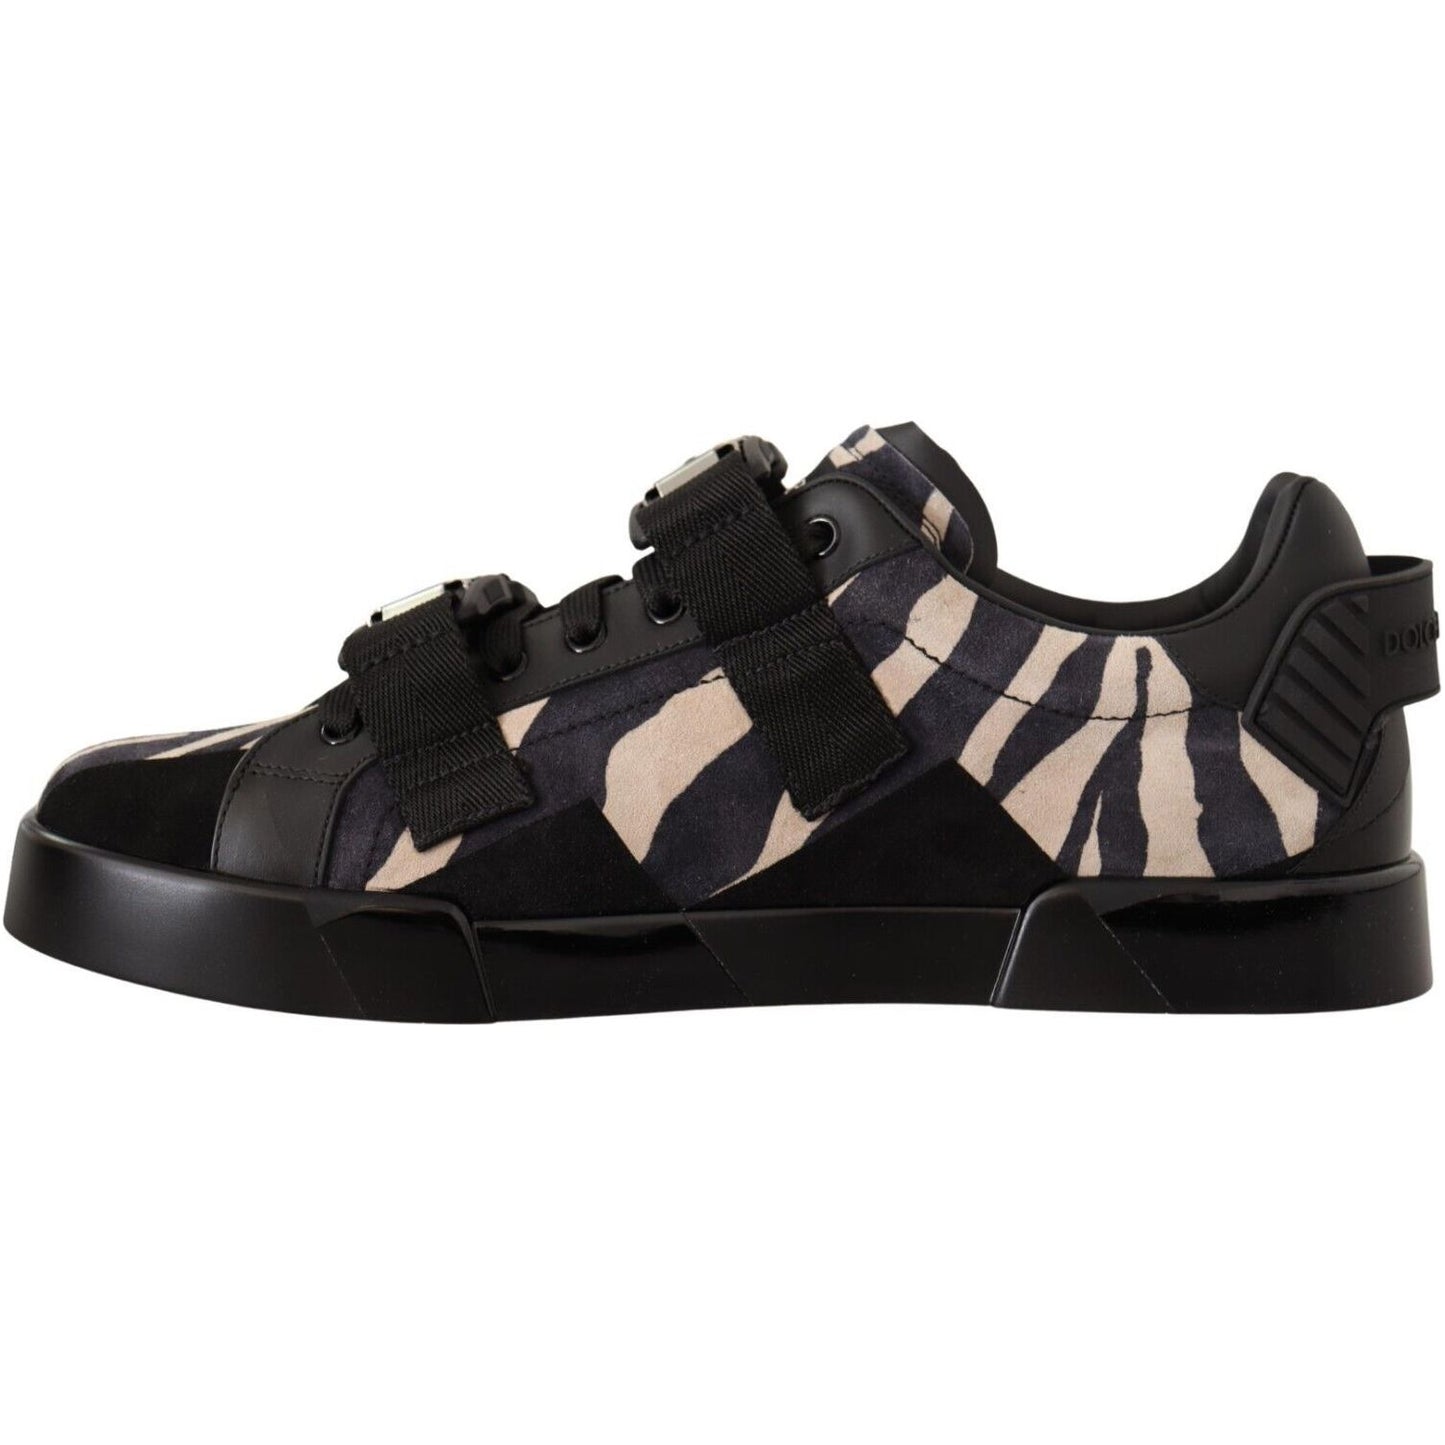 Dolce & Gabbana Zebra Suede Low Top Fashion Sneakers MAN SNEAKERS black-white-zebra-suede-rubber-sneakers-shoes-2 s-l1600-2-67-930c51f5-54c.jpg